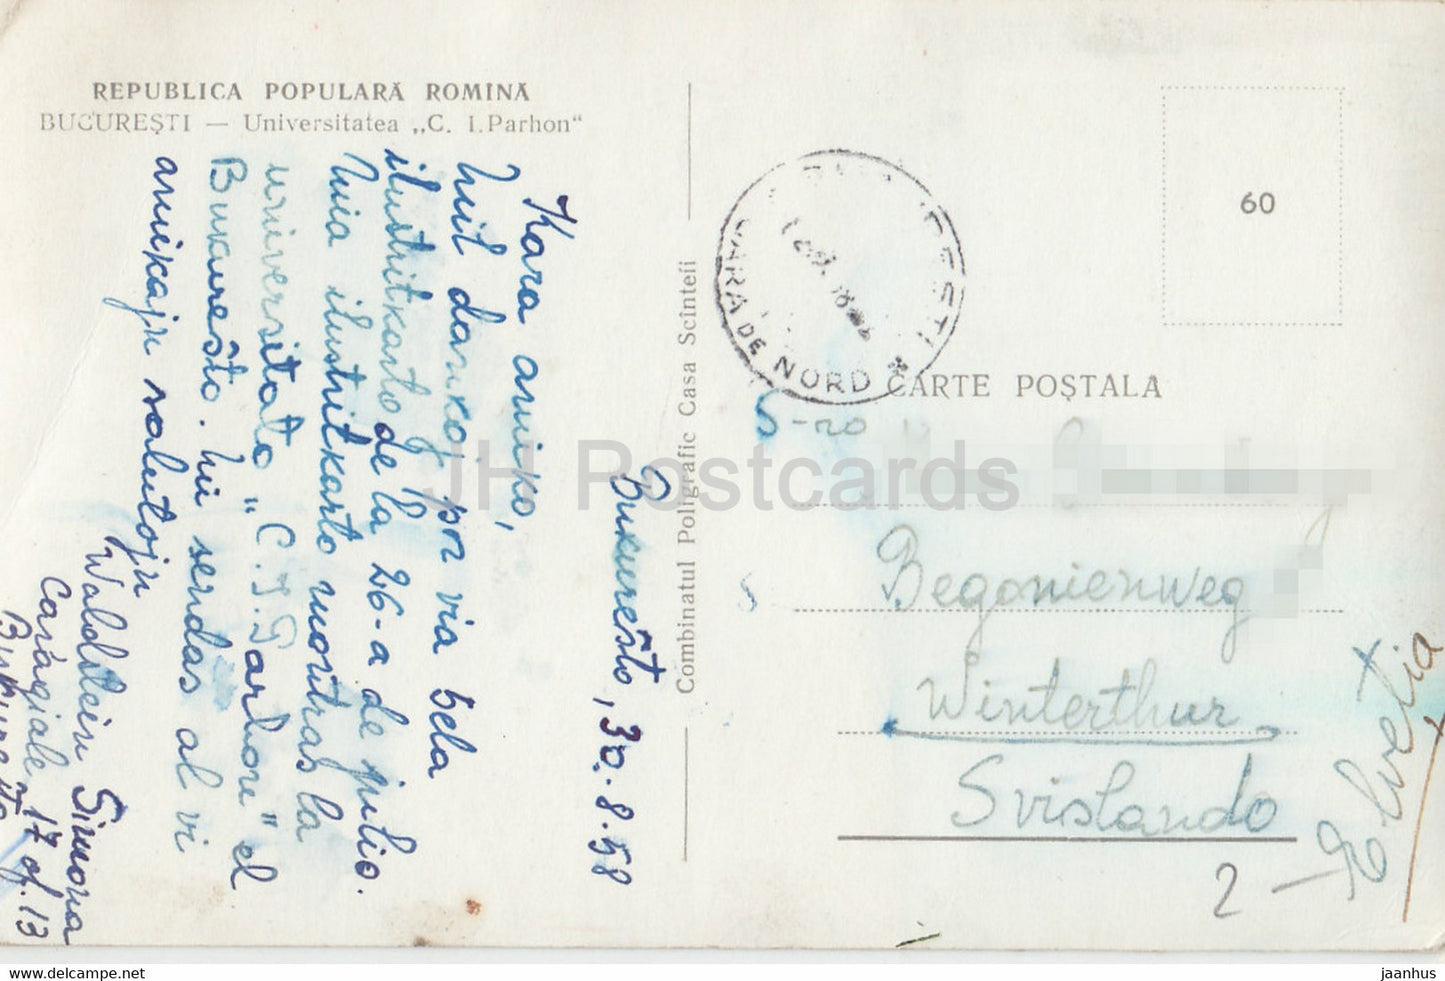 Bukarest - Bucuresti - Universitatea CI Parhon - Straßenbahn - Universität - alte Postkarte - 1958 - Rumänien - gebraucht